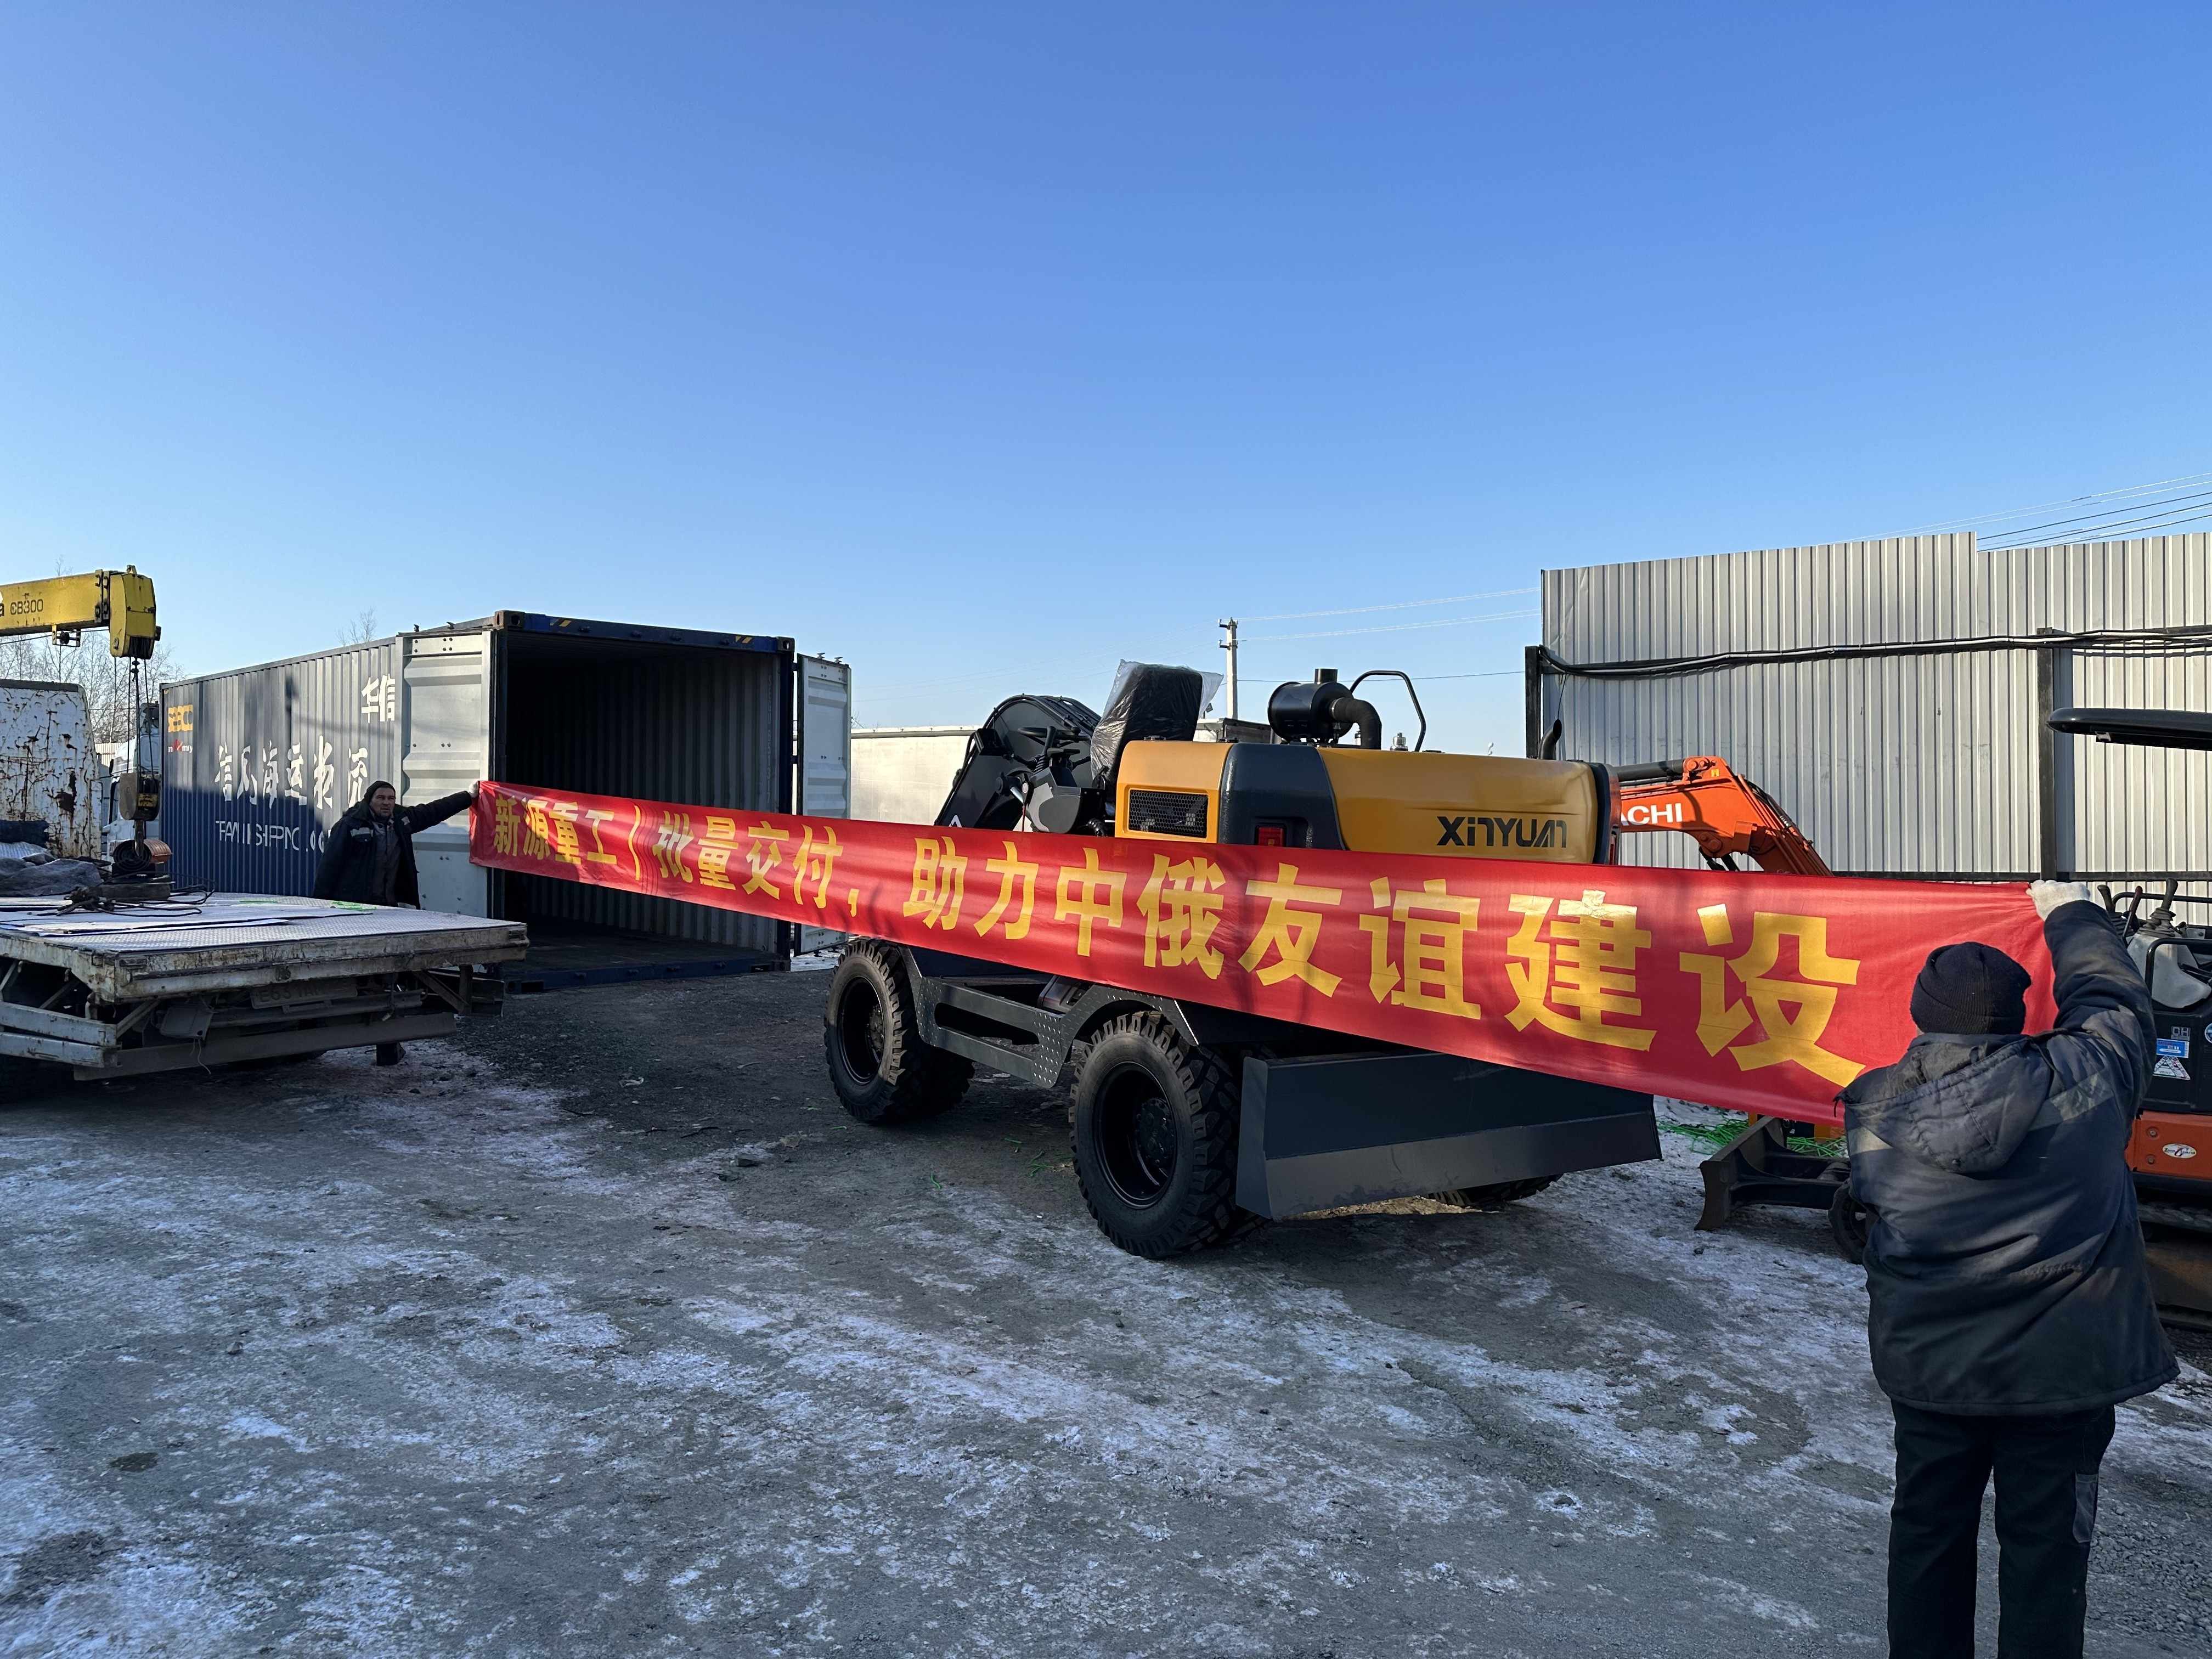 Russian Friends Online Unboxing Xinyuan C75W and C120W Wheel Excavators!